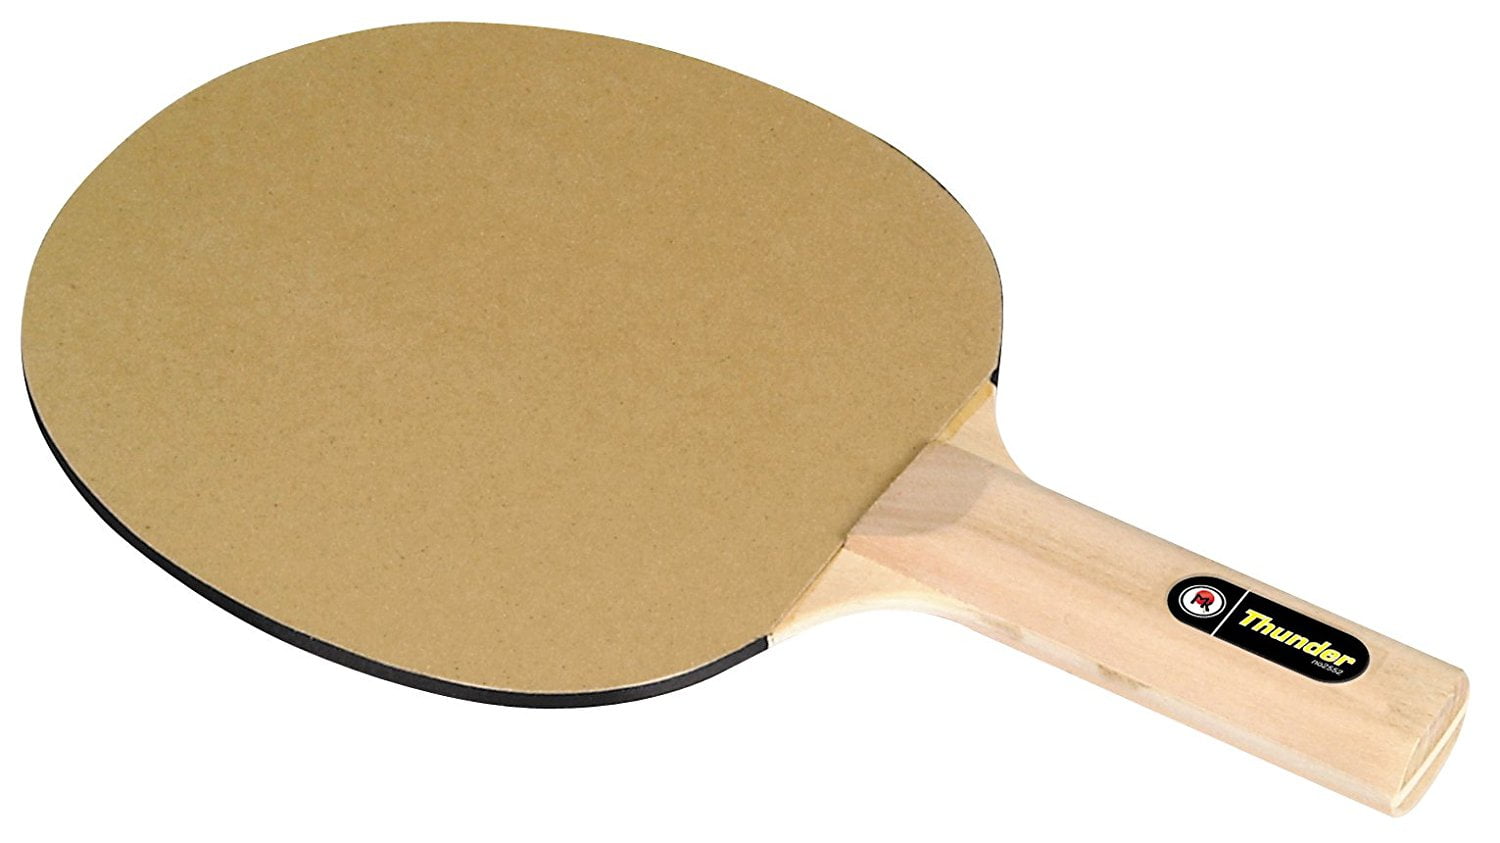 Thunder Table Tennis Paddle from Martin Kilpatrick Set of 4 